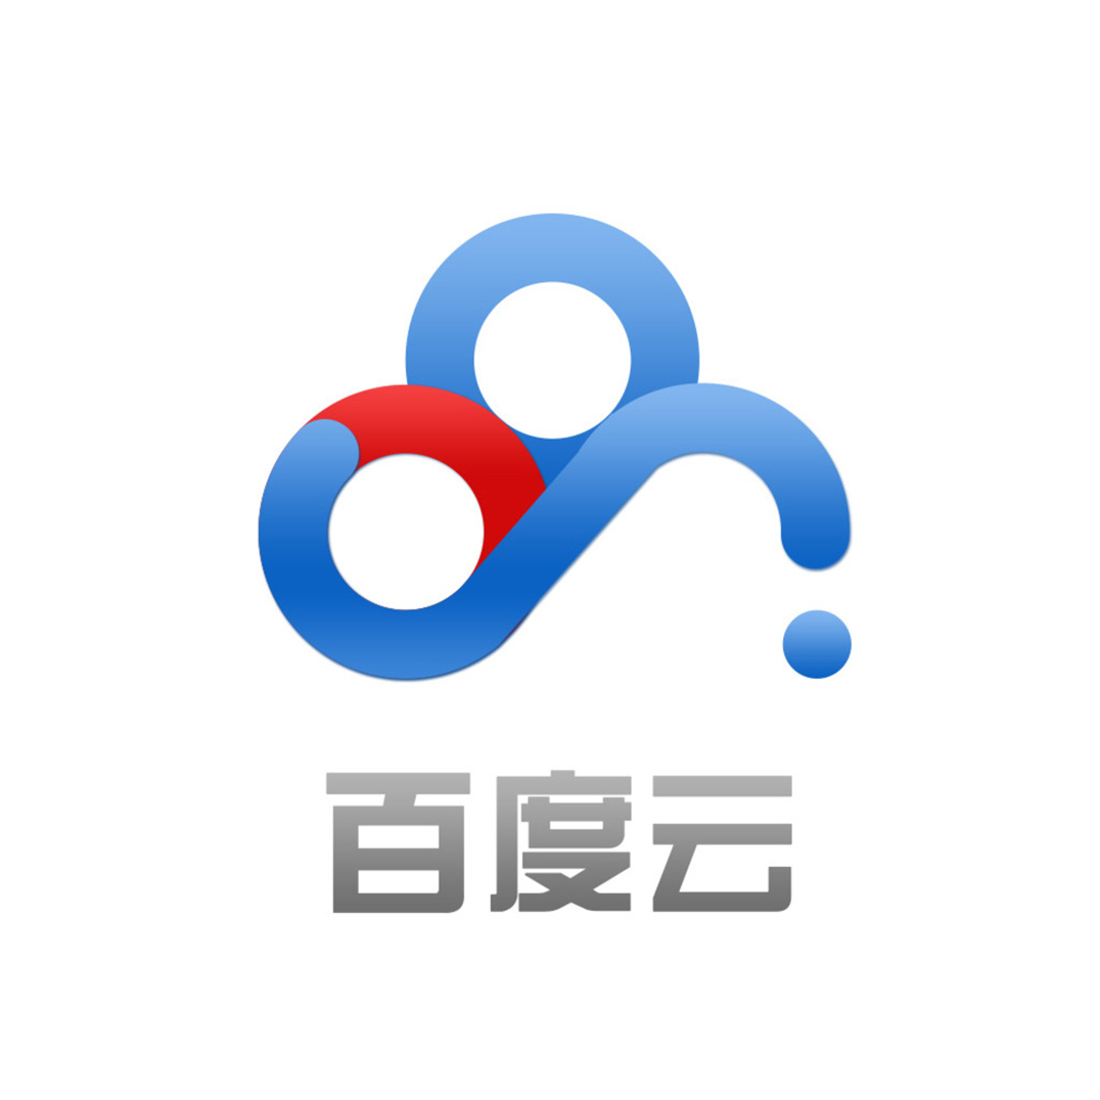 Pan baidu com s. Baidu логотип. Baidu кондиционер. Ассортимент baidu. Baidu оранжевый.